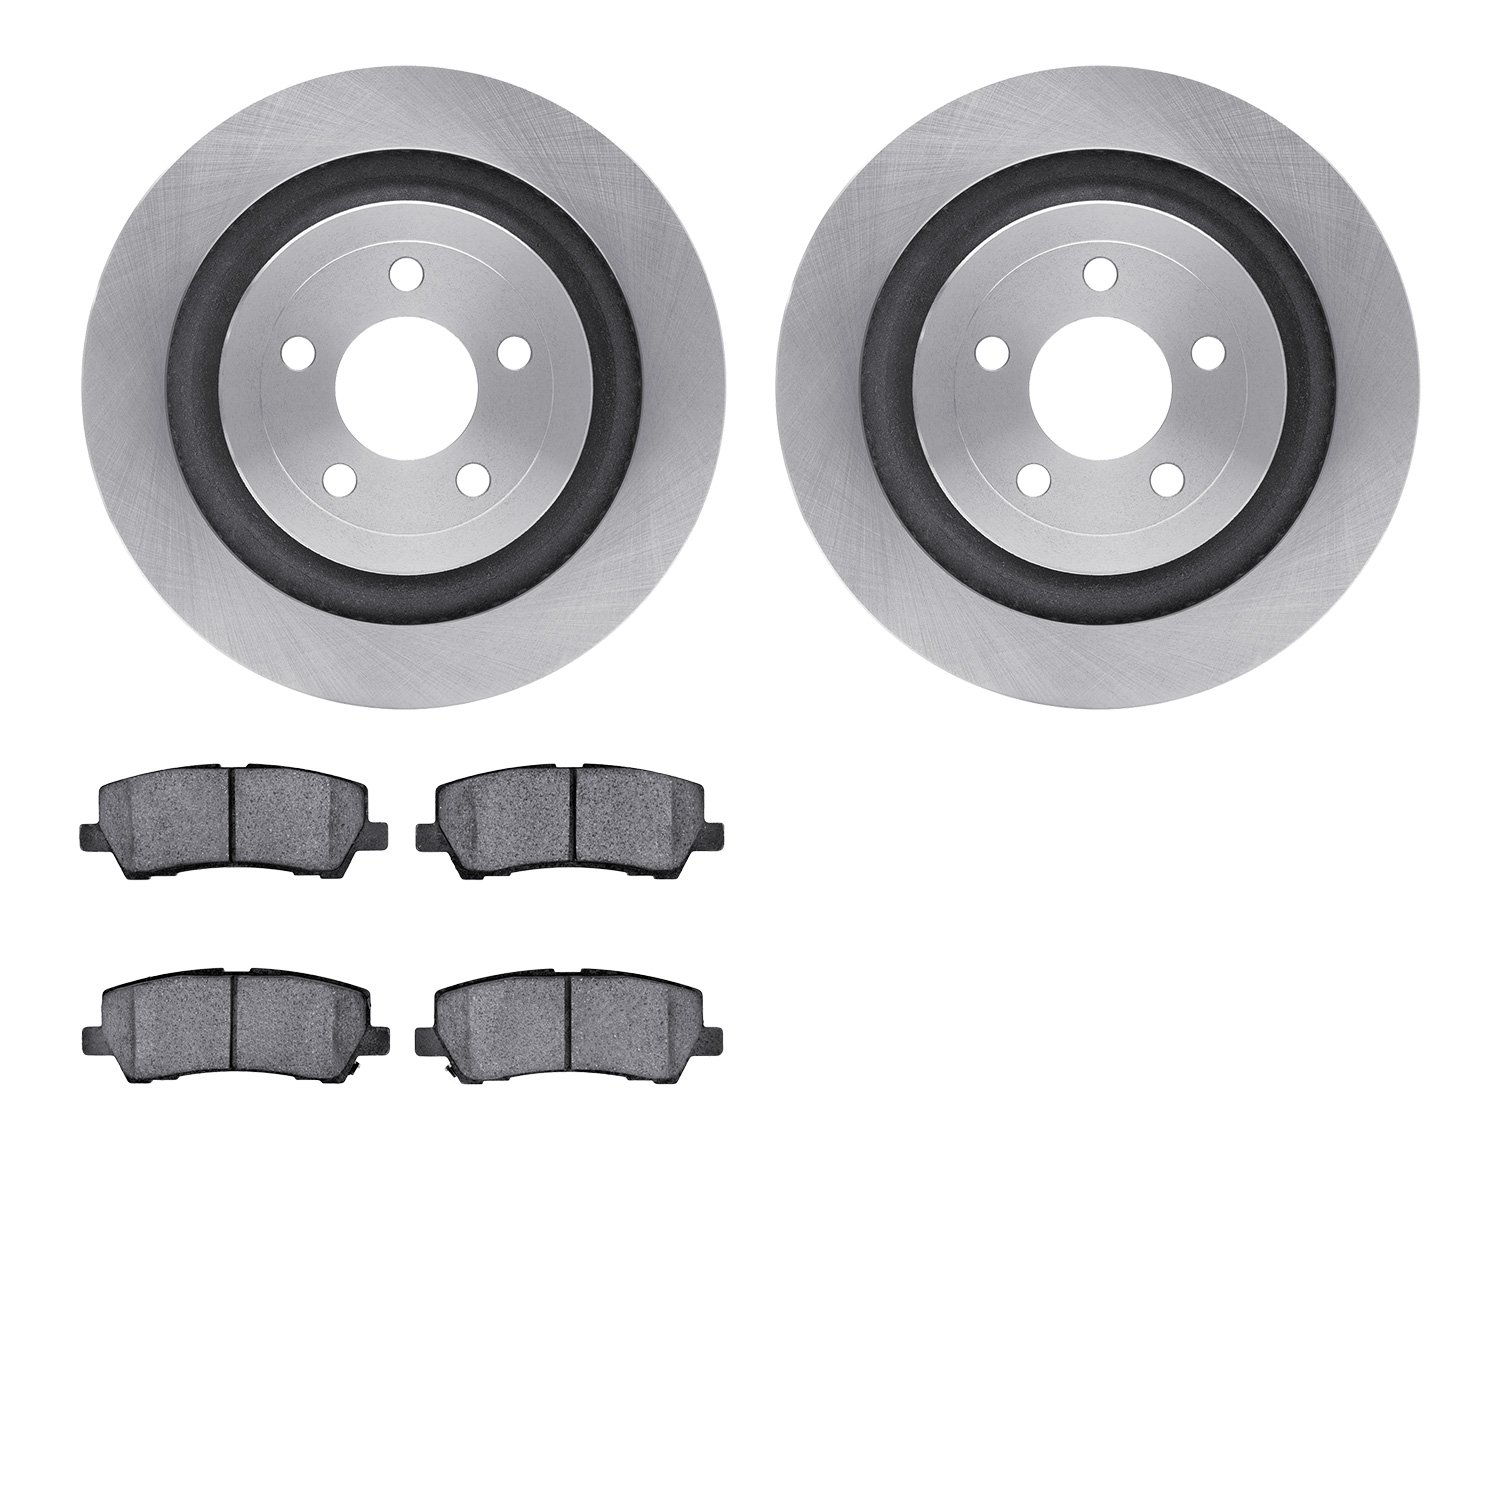 6202-99140 Brake Rotors w/Heavy-Duty Brake Pads Kit, Fits Select Ford/Lincoln/Mercury/Mazda, Position: Rear